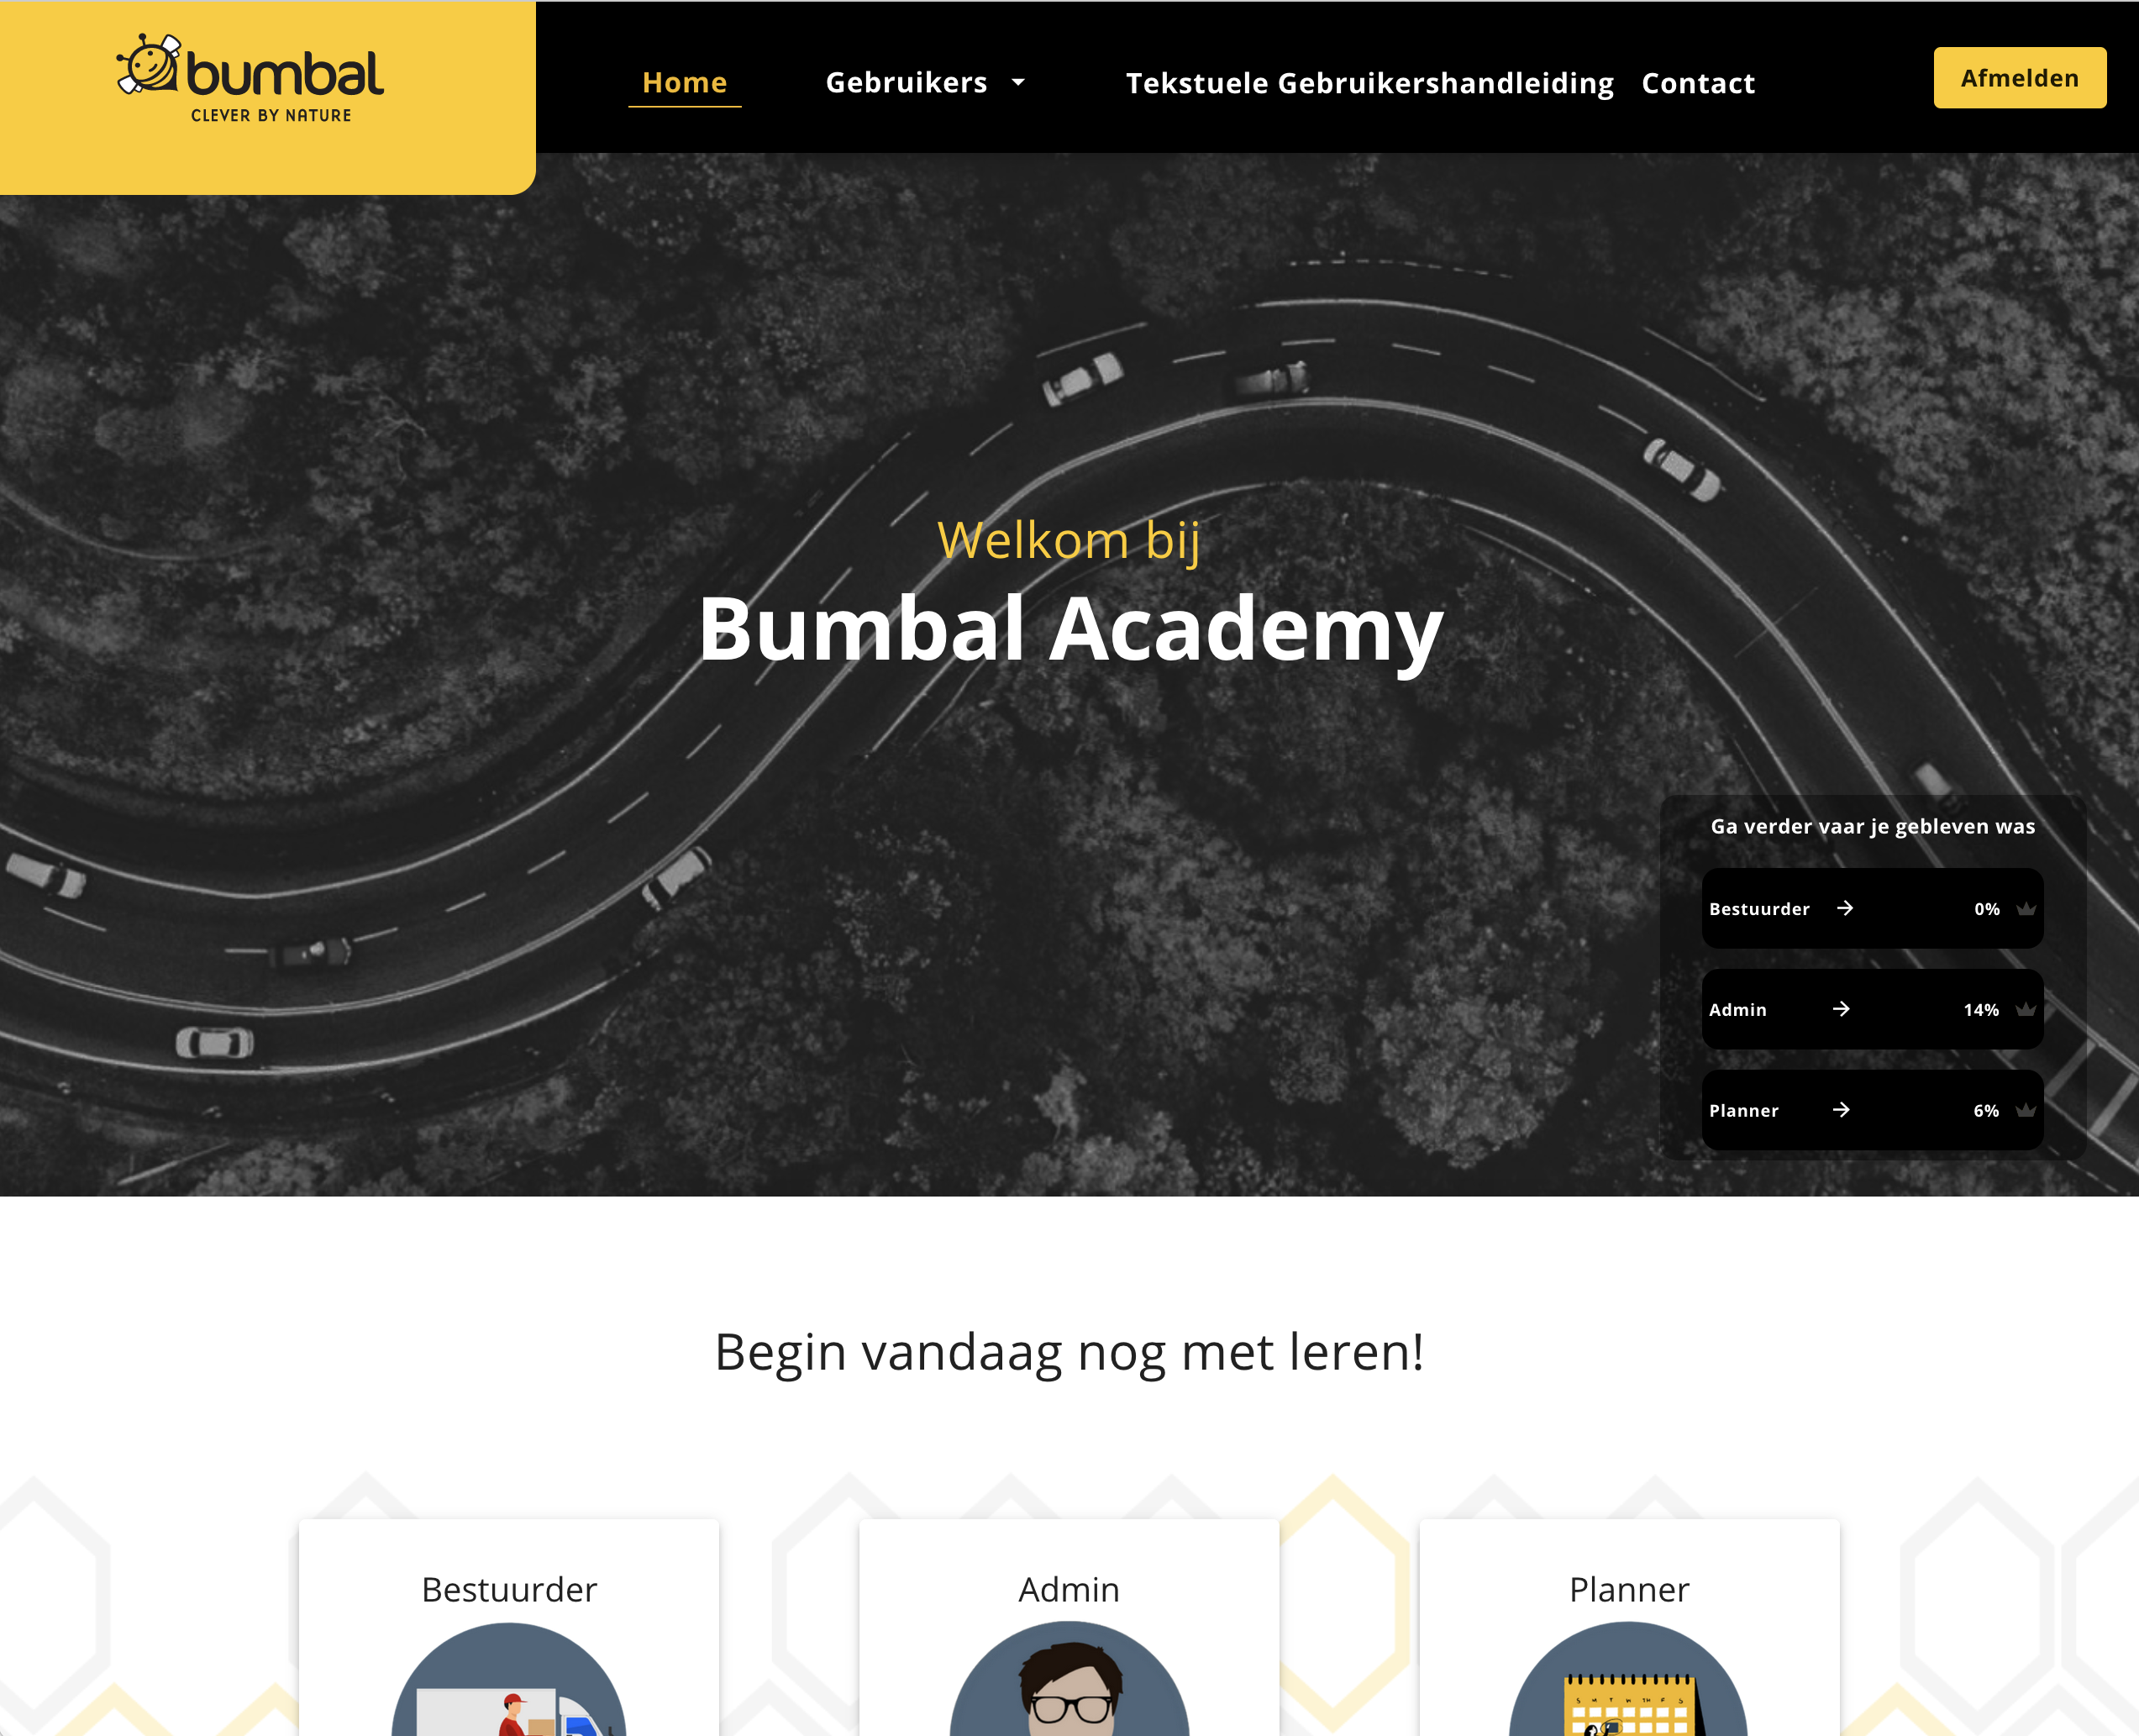 bumbal academy, bezorgsoftware, transport planning,